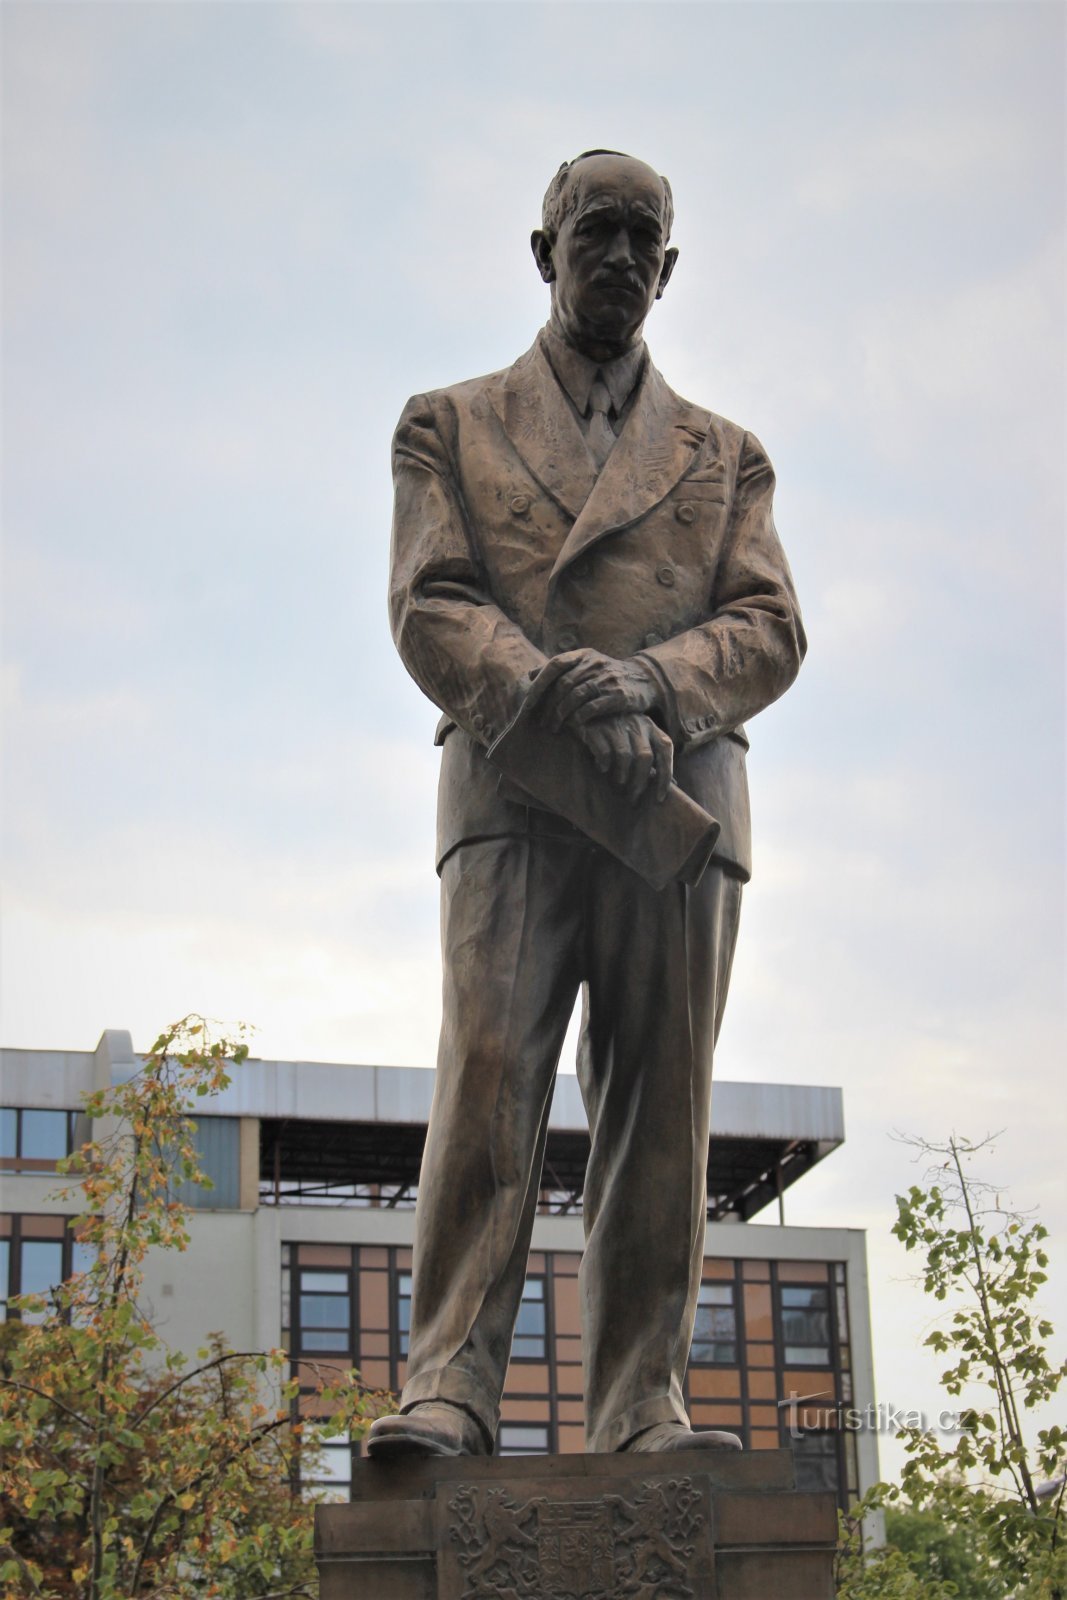 The statue of Edvard Beneš